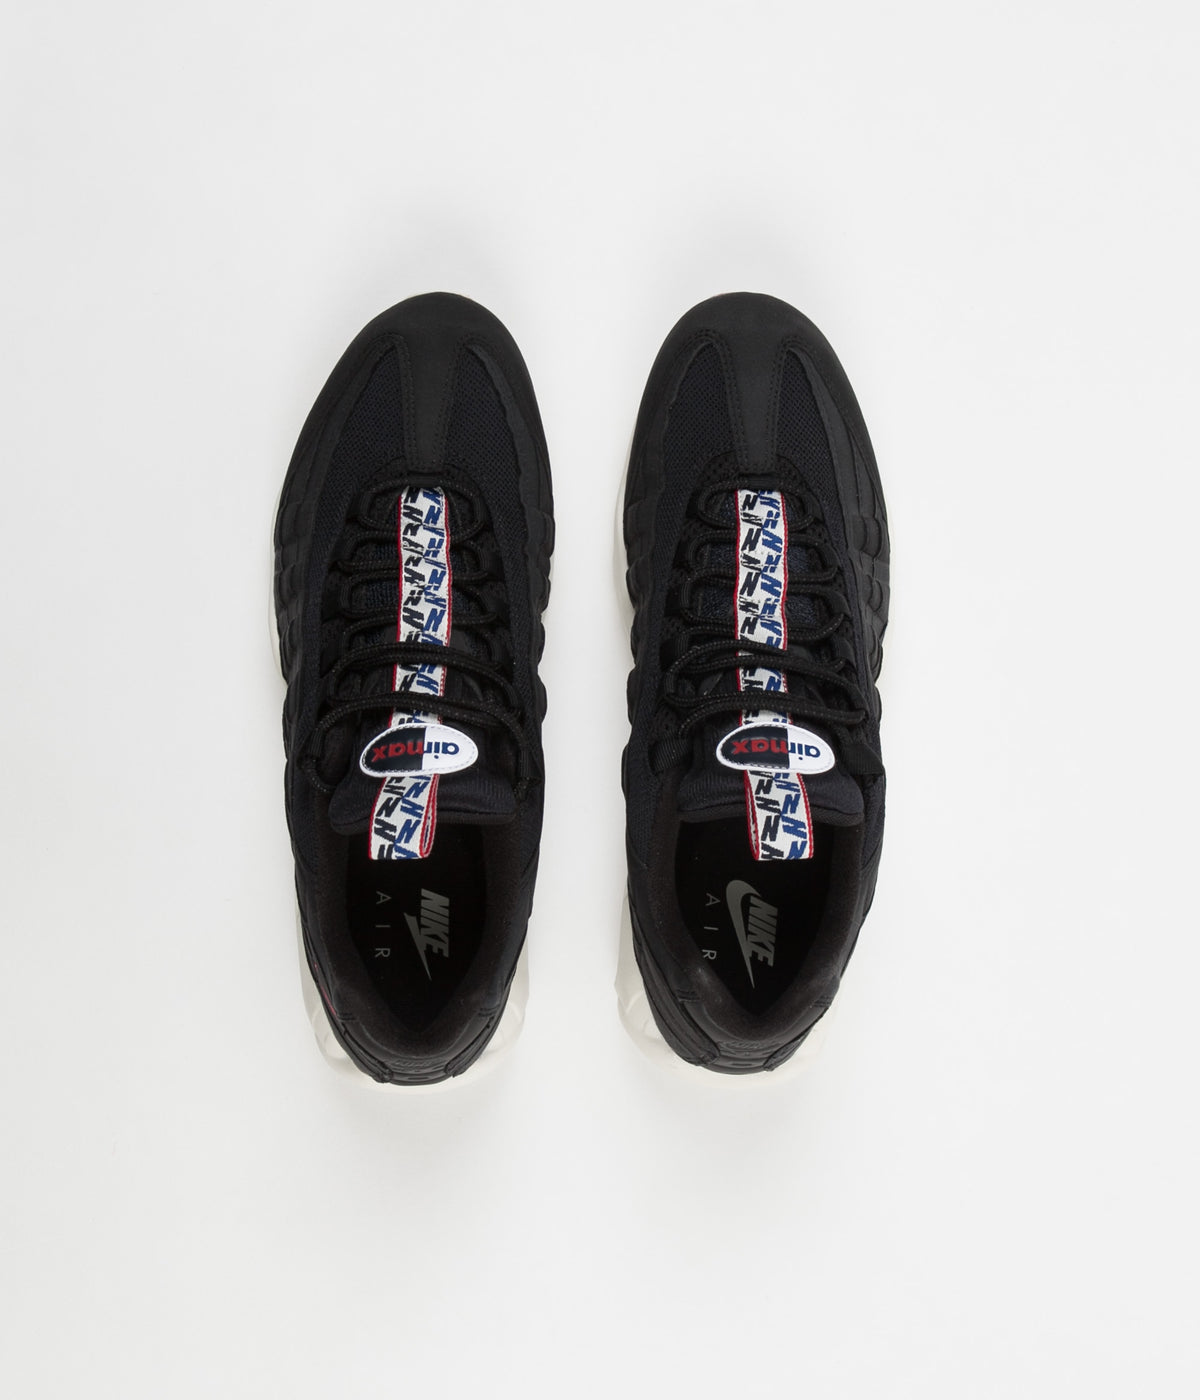 Nike Air Max 95 TT Shoes - Black / Sail - Red | Always in Colour